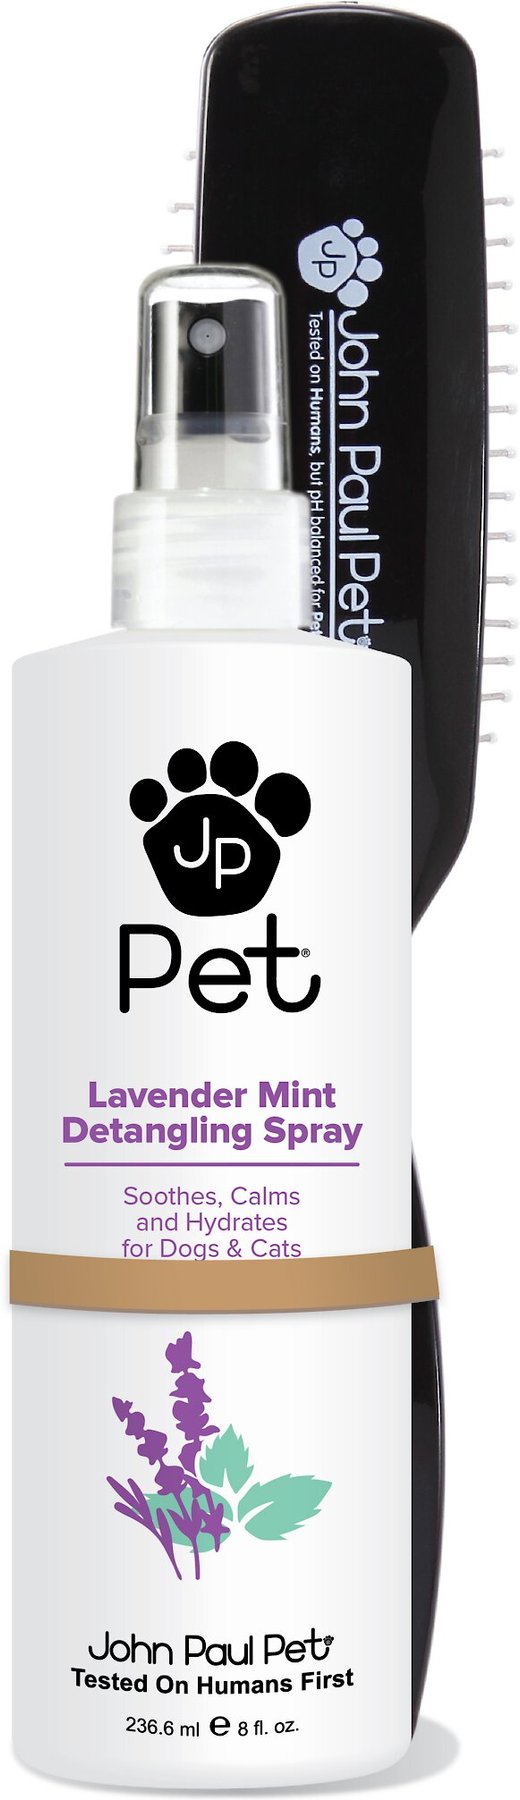 John Paul Pet Lavender Mint Detangling Spray, 8 fl.oz.